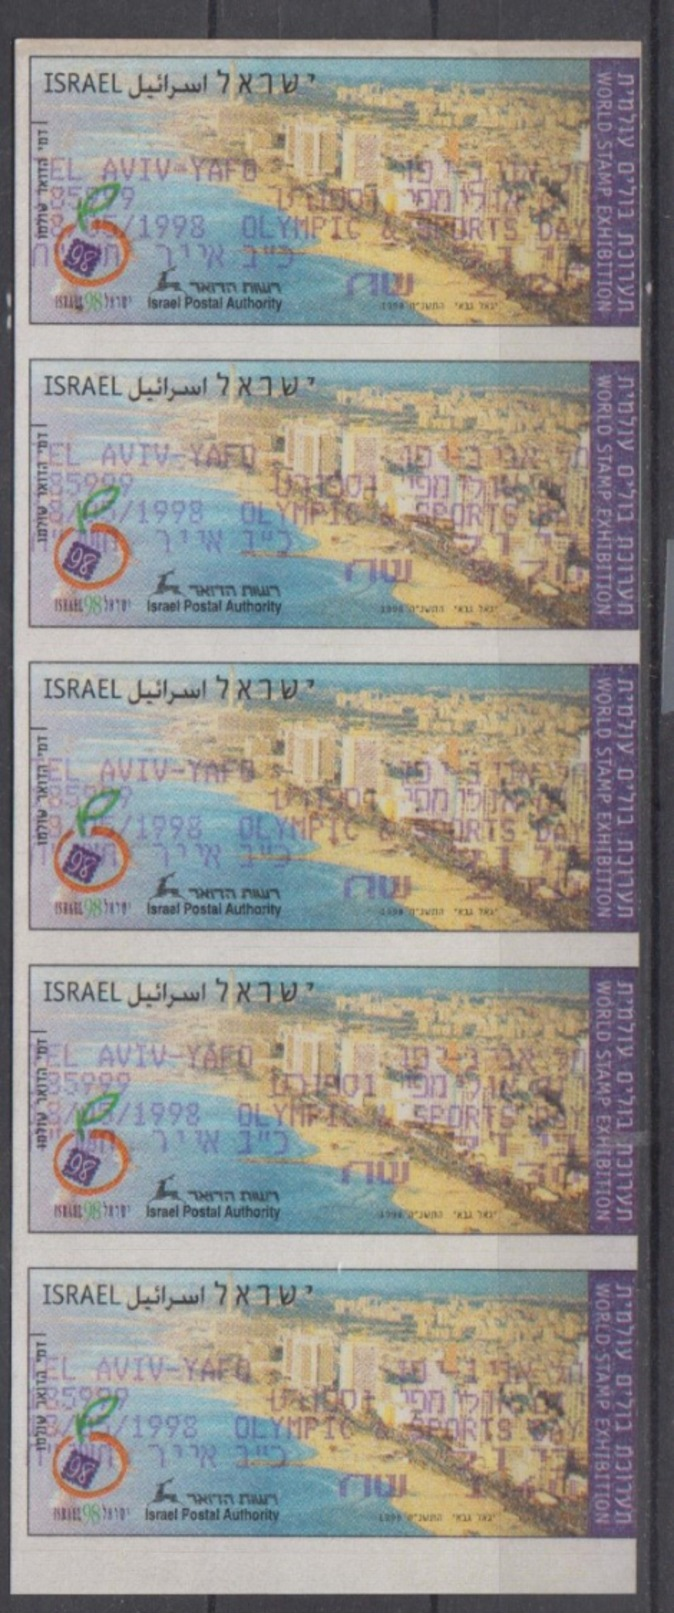 ISRAEL KLUSSENDORF SIMA FRAMA ATM MASSAD WORLD STAMP EXHIBITION 1998 TEL AVIV YAFO LINE OF 5 STAMPS - Franking Labels